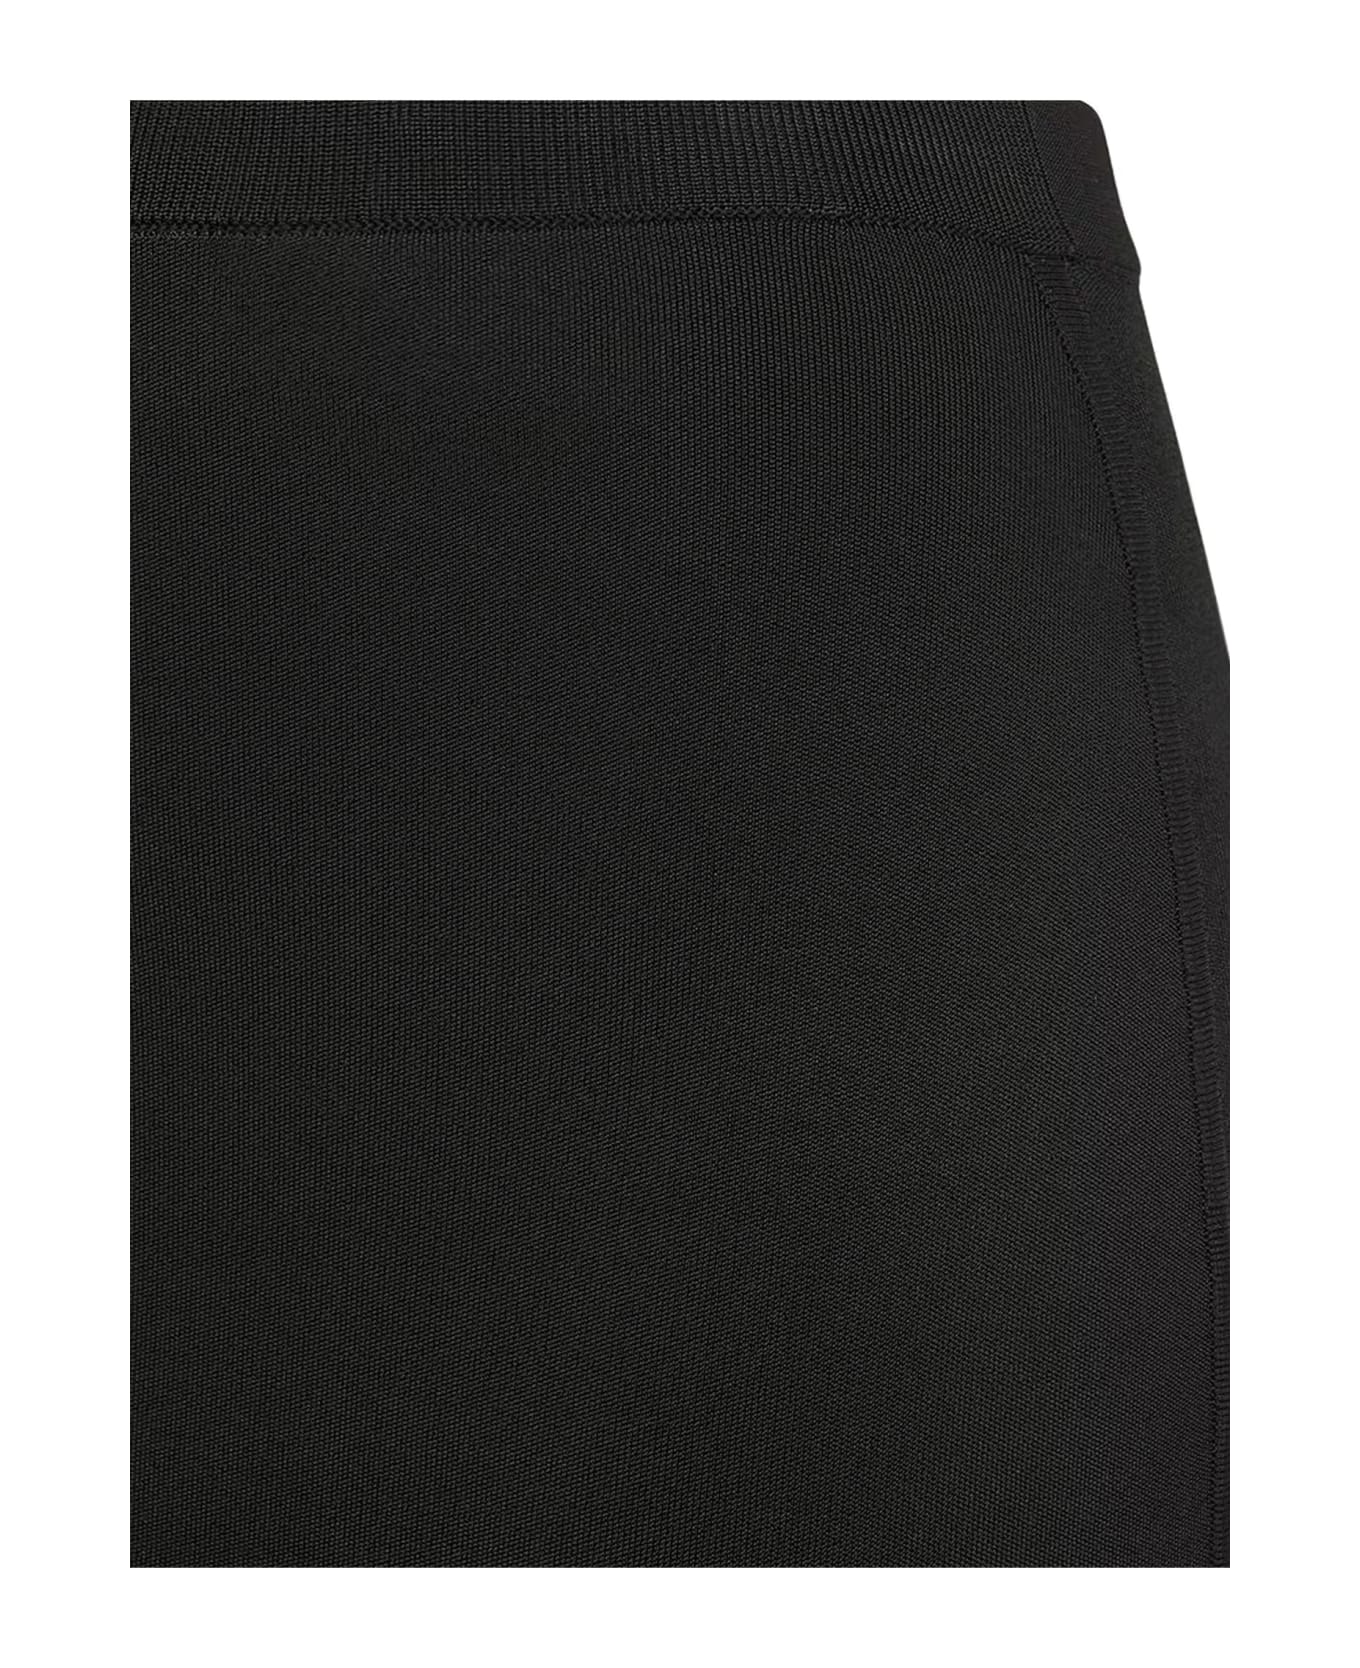 Saint Laurent Viscose Blend Skirt - Black スカート